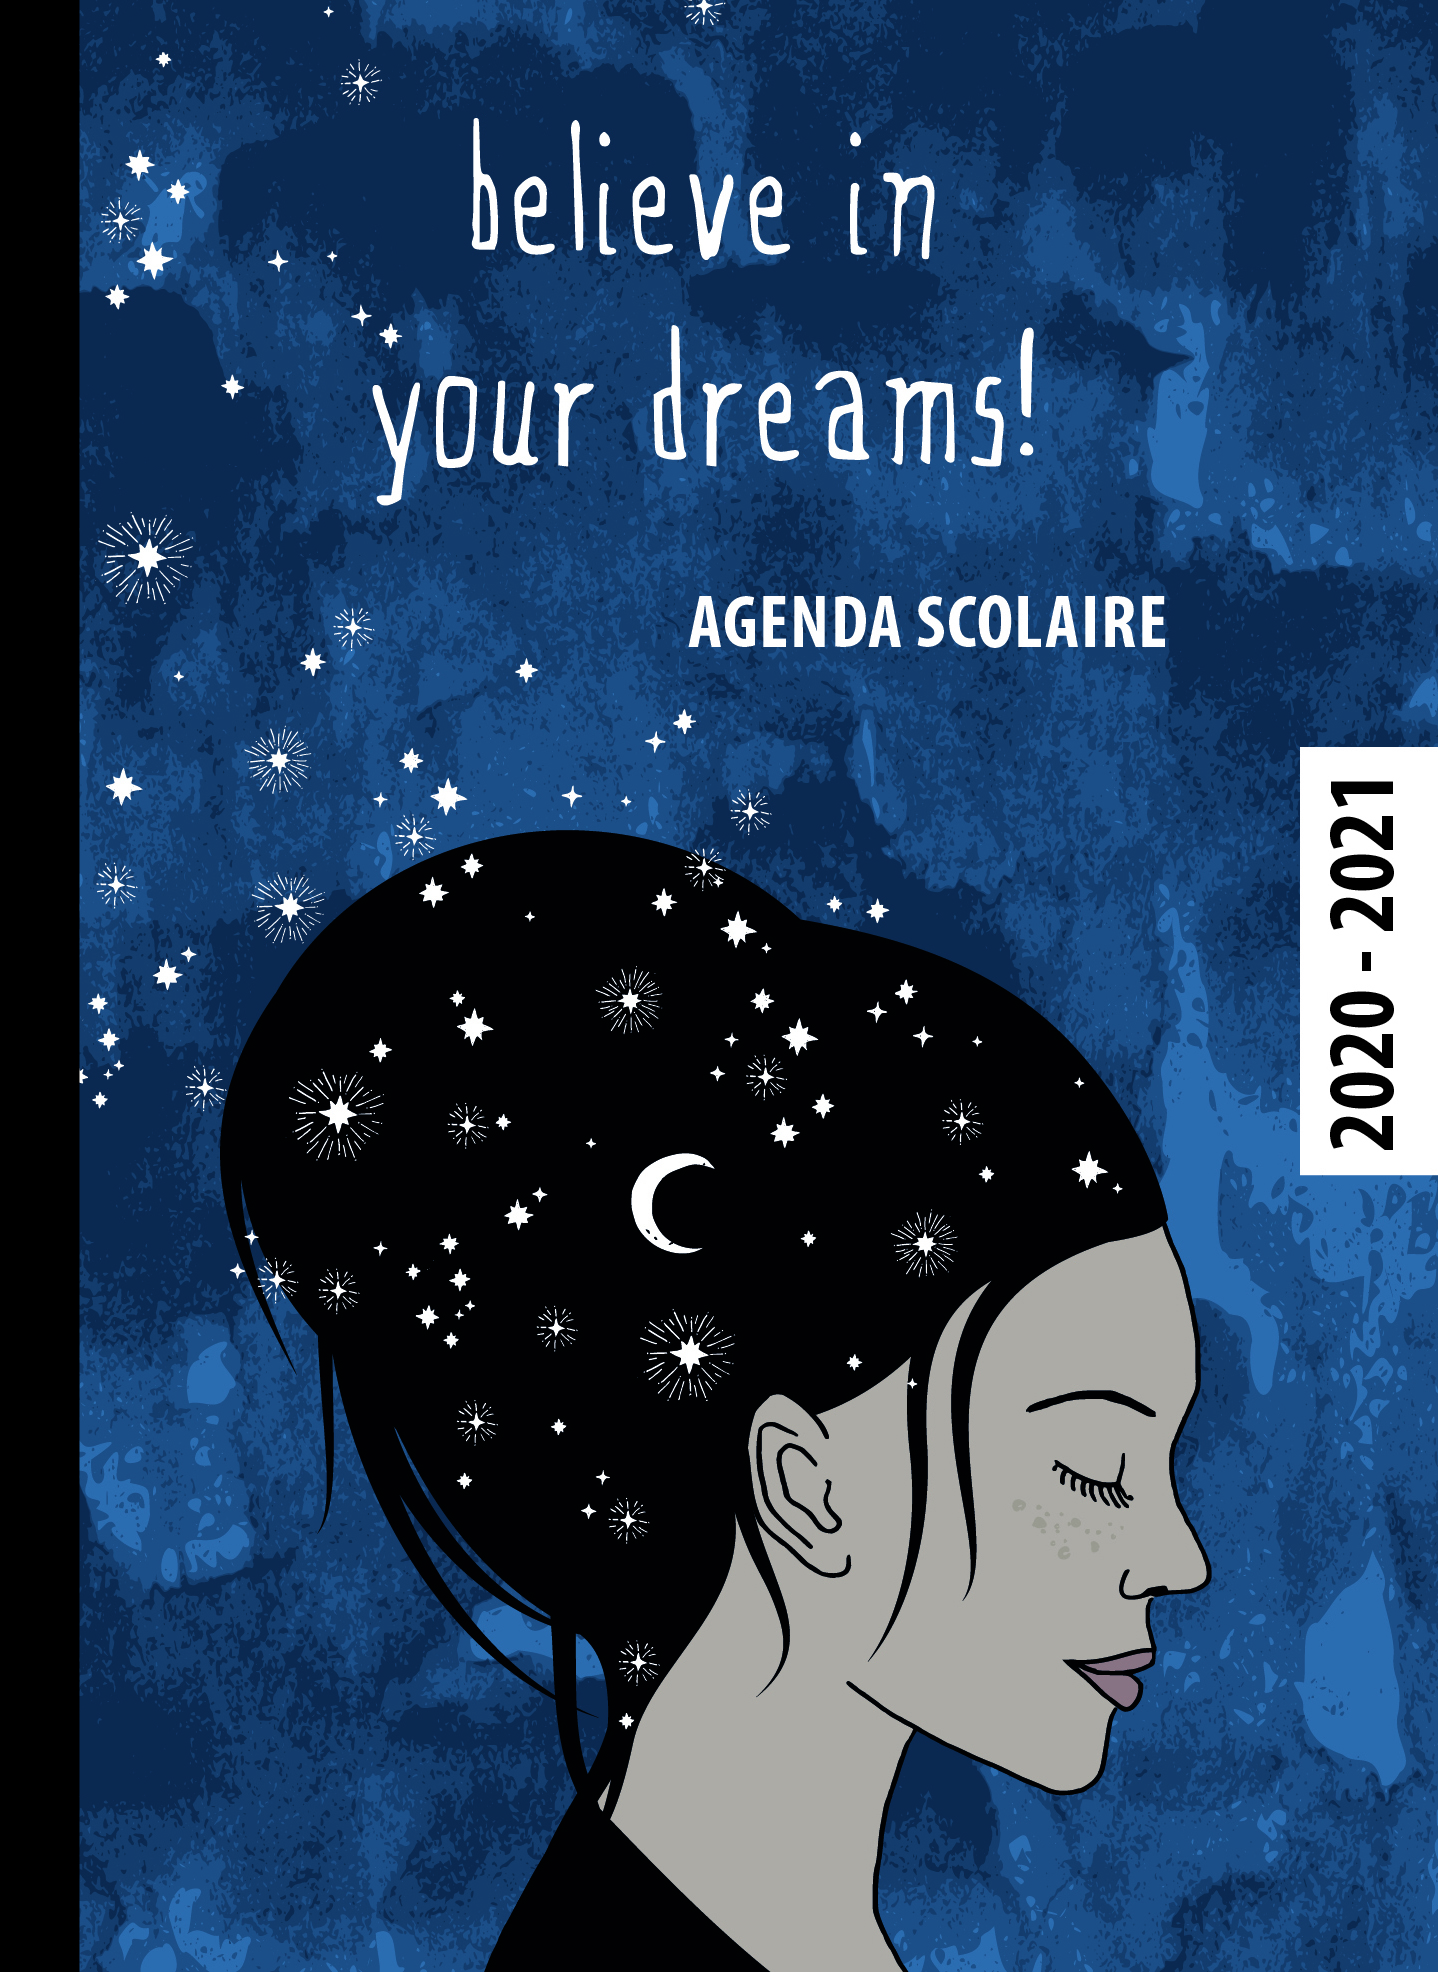 Agenda Scolaire 2020-2021 - Believe In Your Dreams